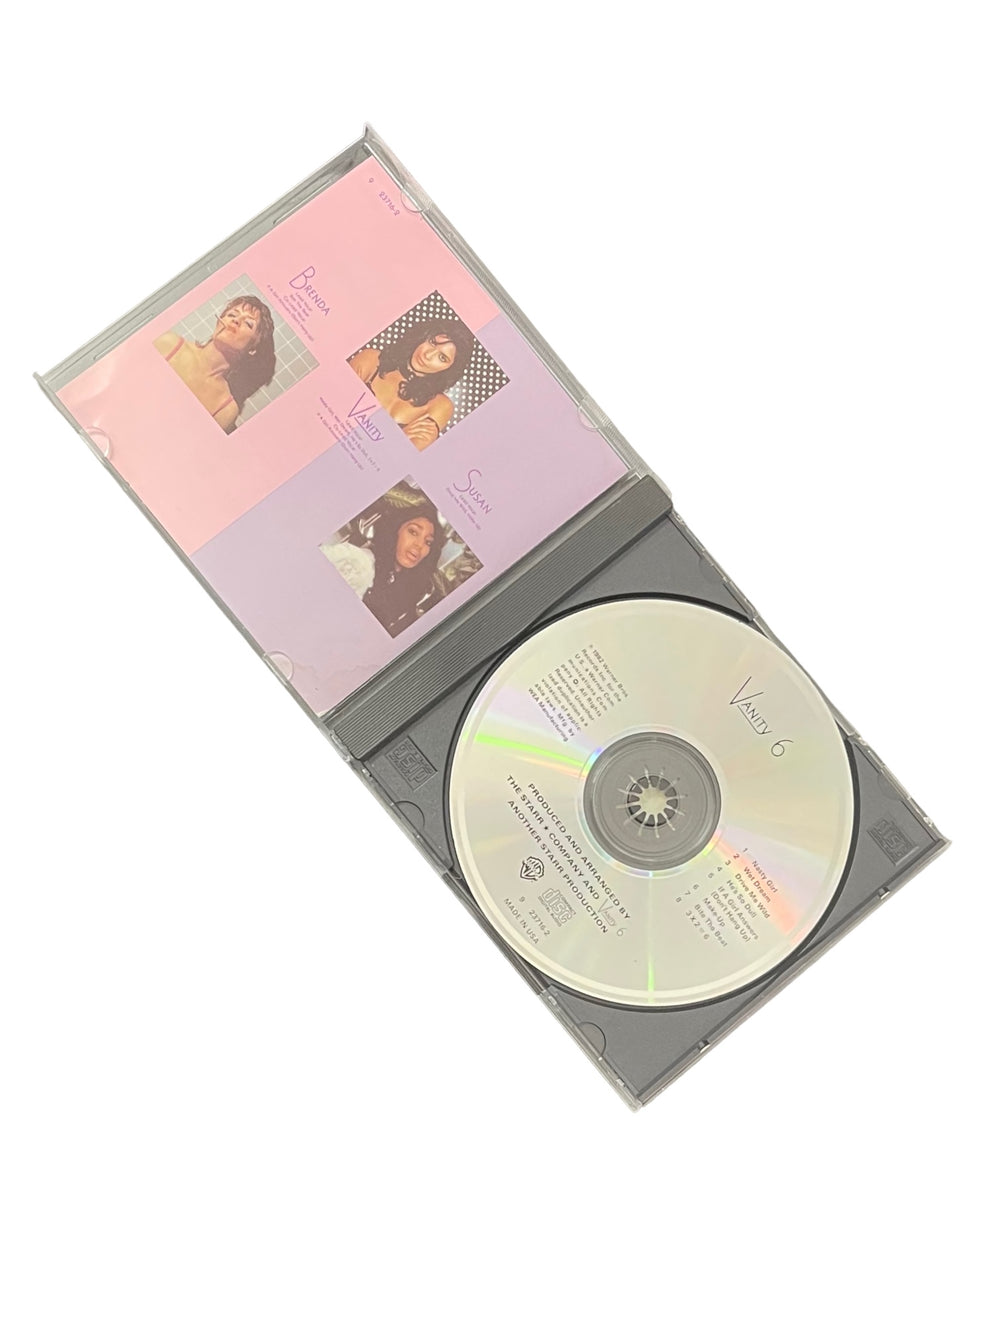 Prince – Vanity 6 Self Titled 1982 CD Album USA Release 8 Tracks Jewel Case Prince